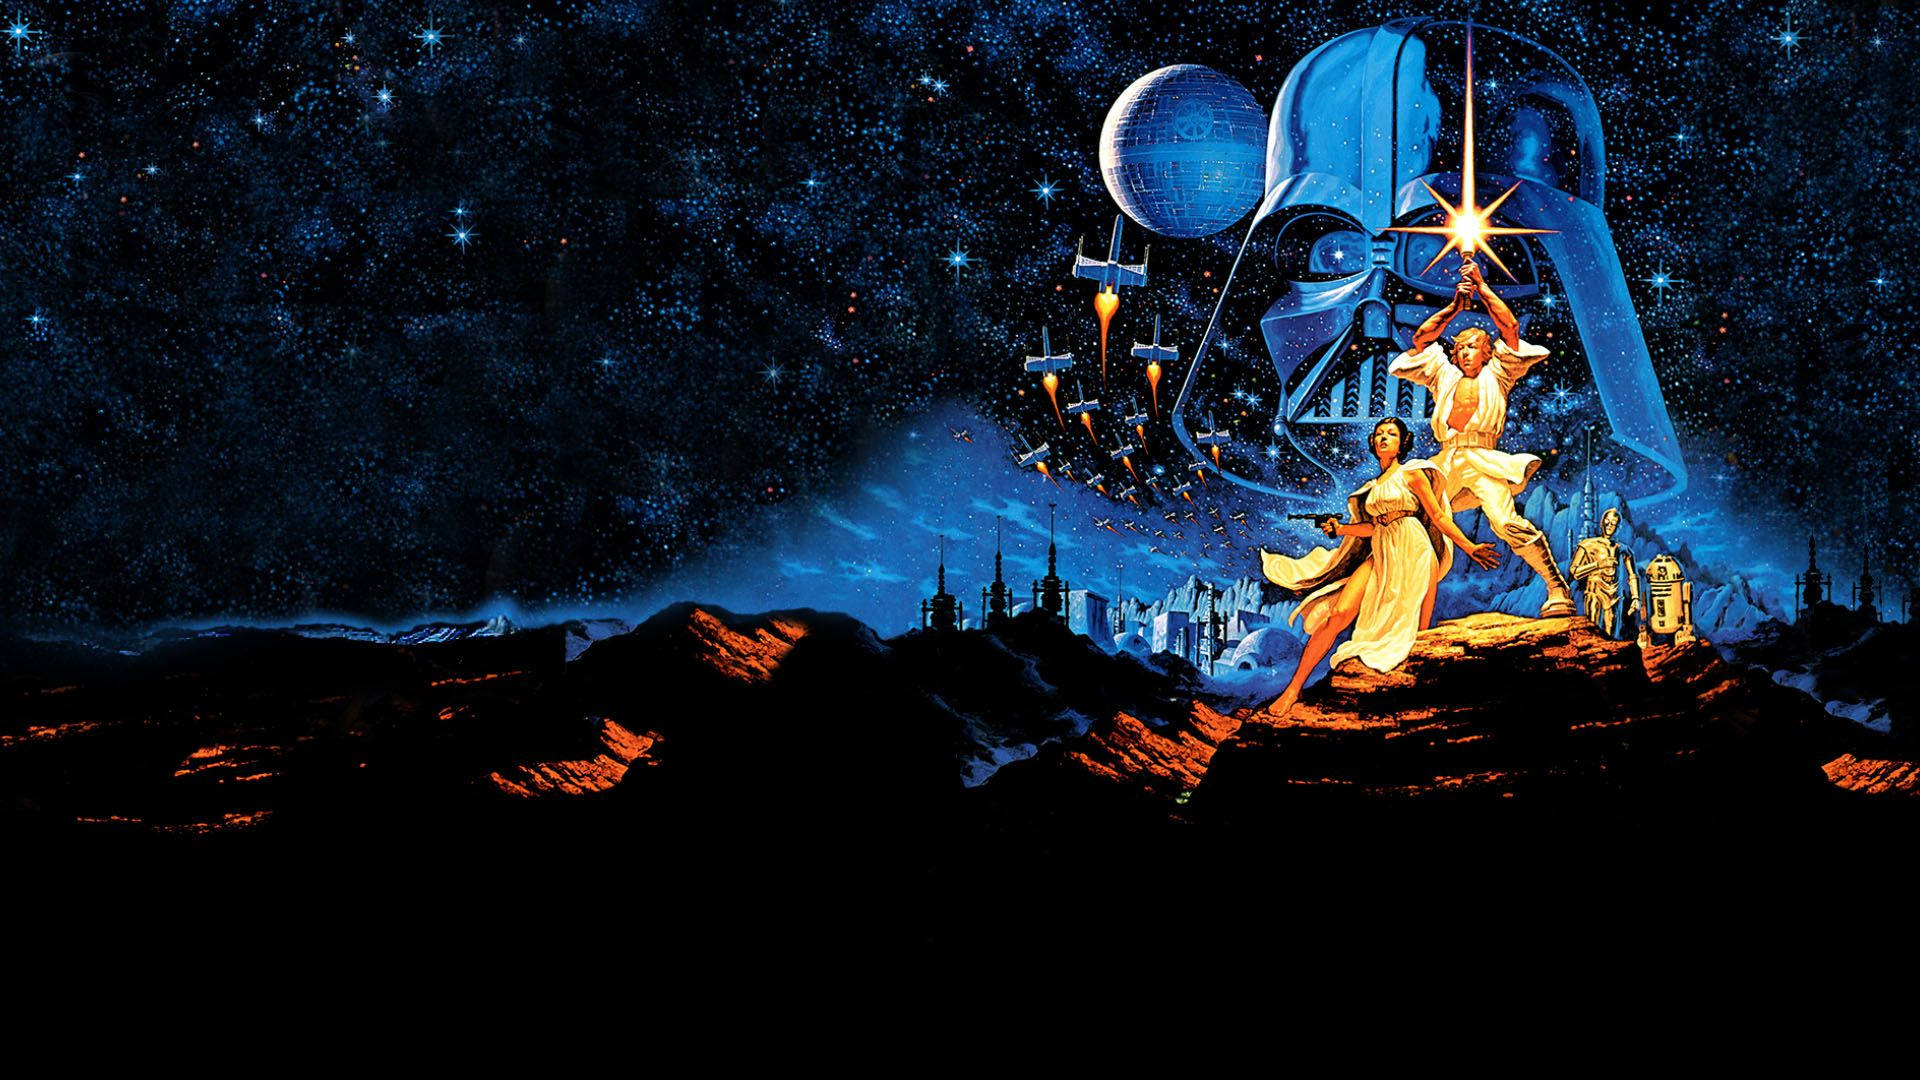 Top 999+ Star Wars Wallpaper Full HD, 4K✅Free to Use